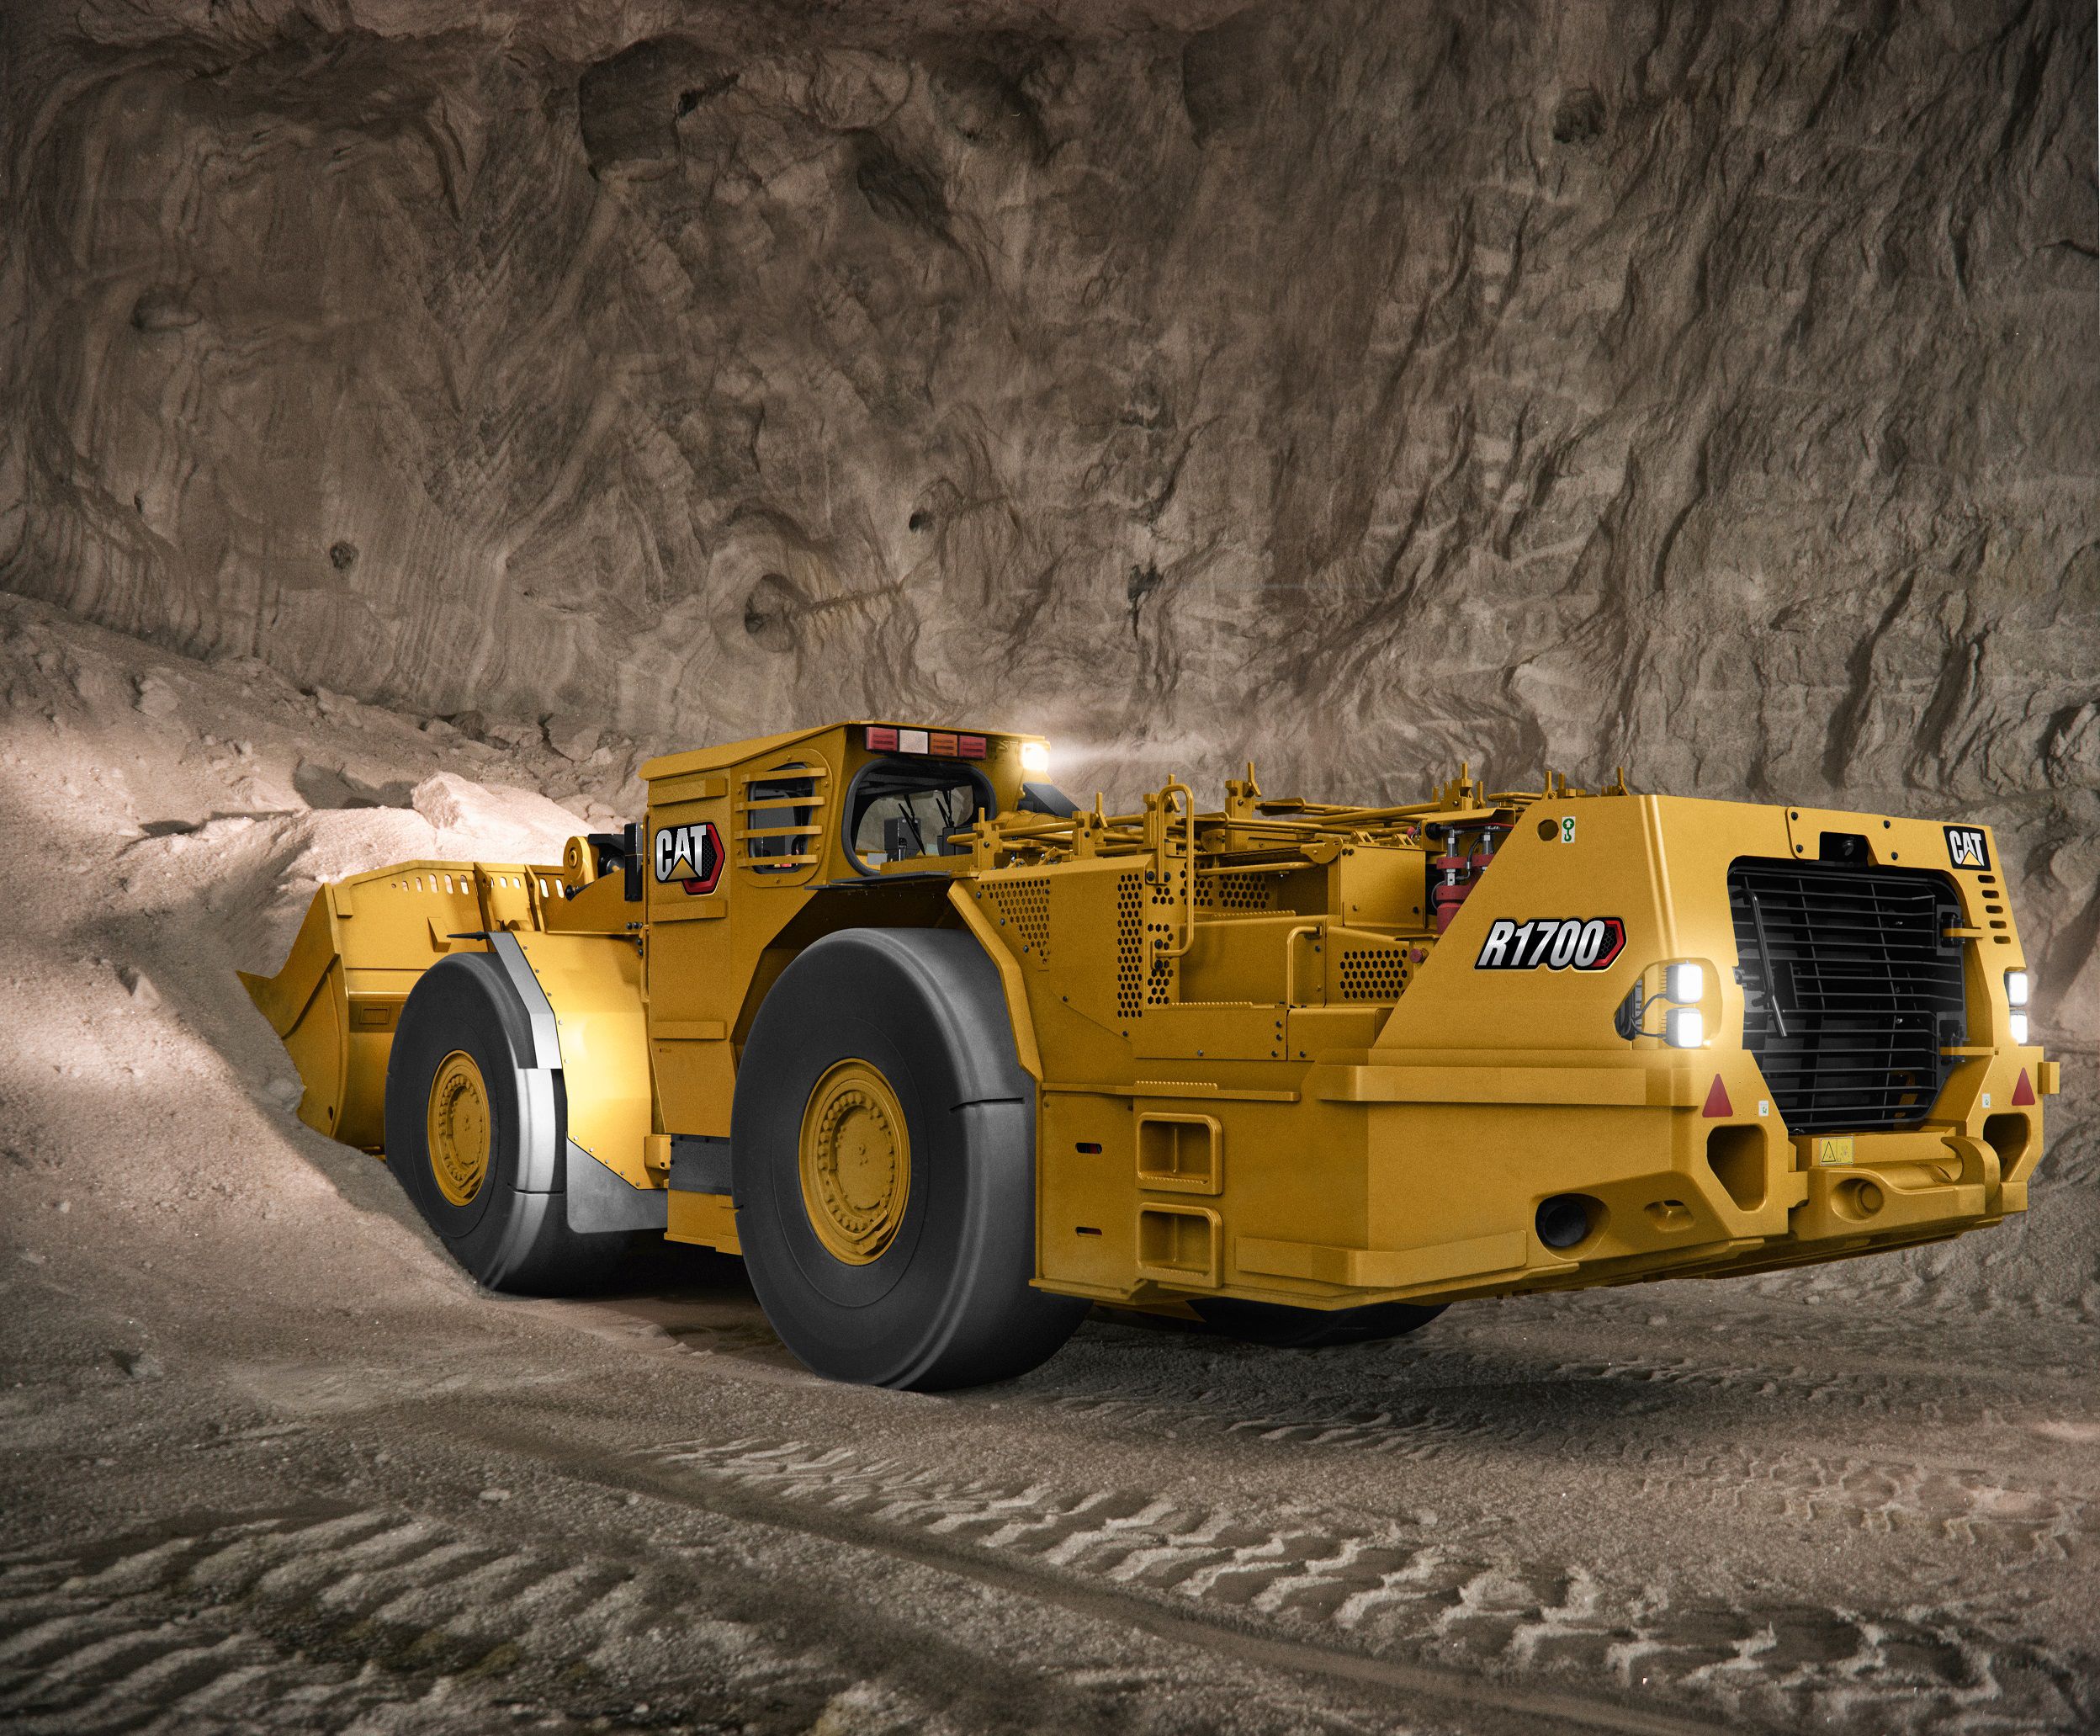 R1700 Underground Mining Load Haul Dump (LHD) Loaders | Cat | Caterpillar